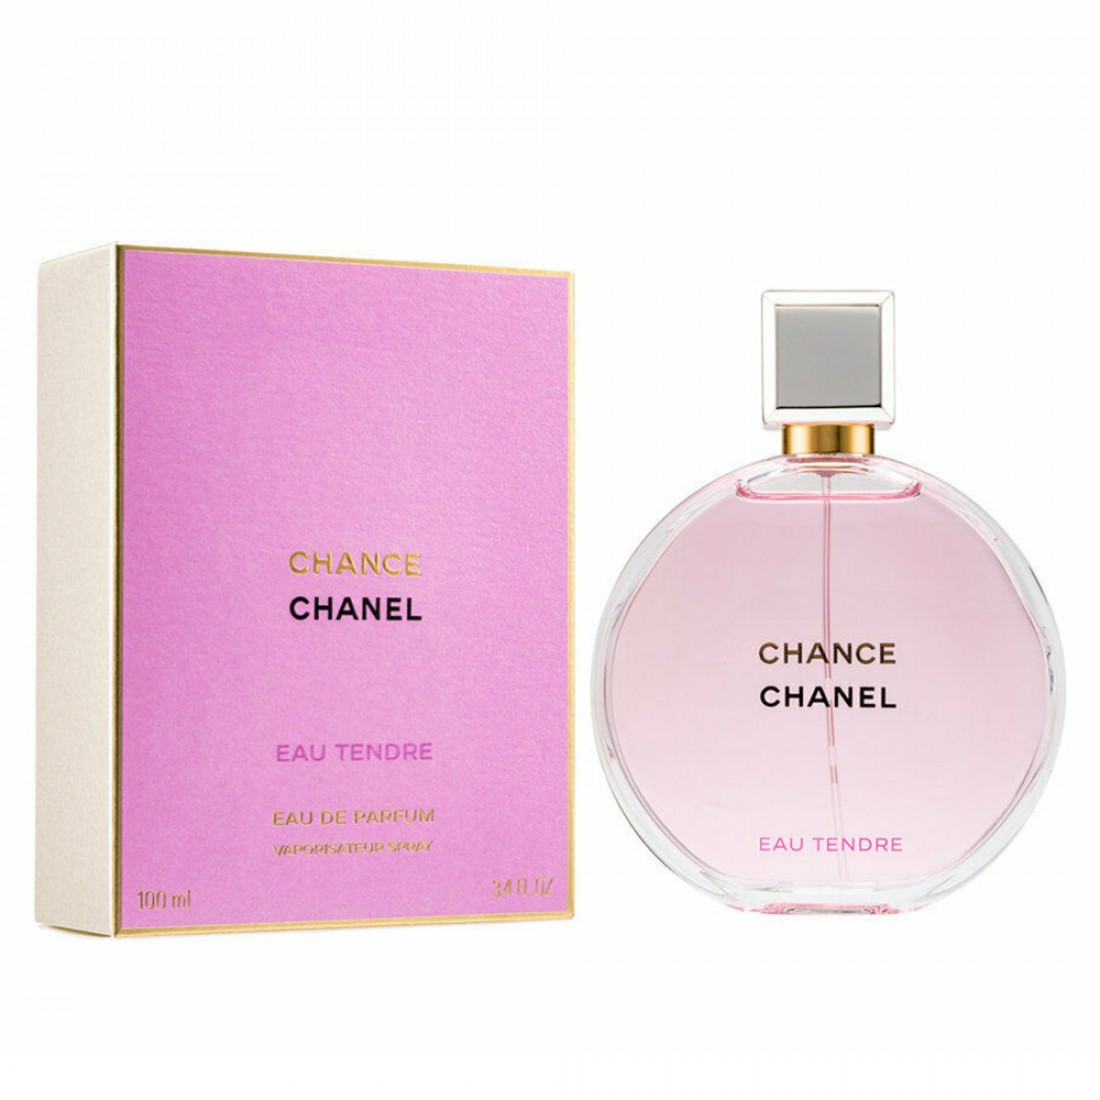 Perfume Chanel Chance Eau Tender for Women- Eau de Parfum, 100 ml - عطر